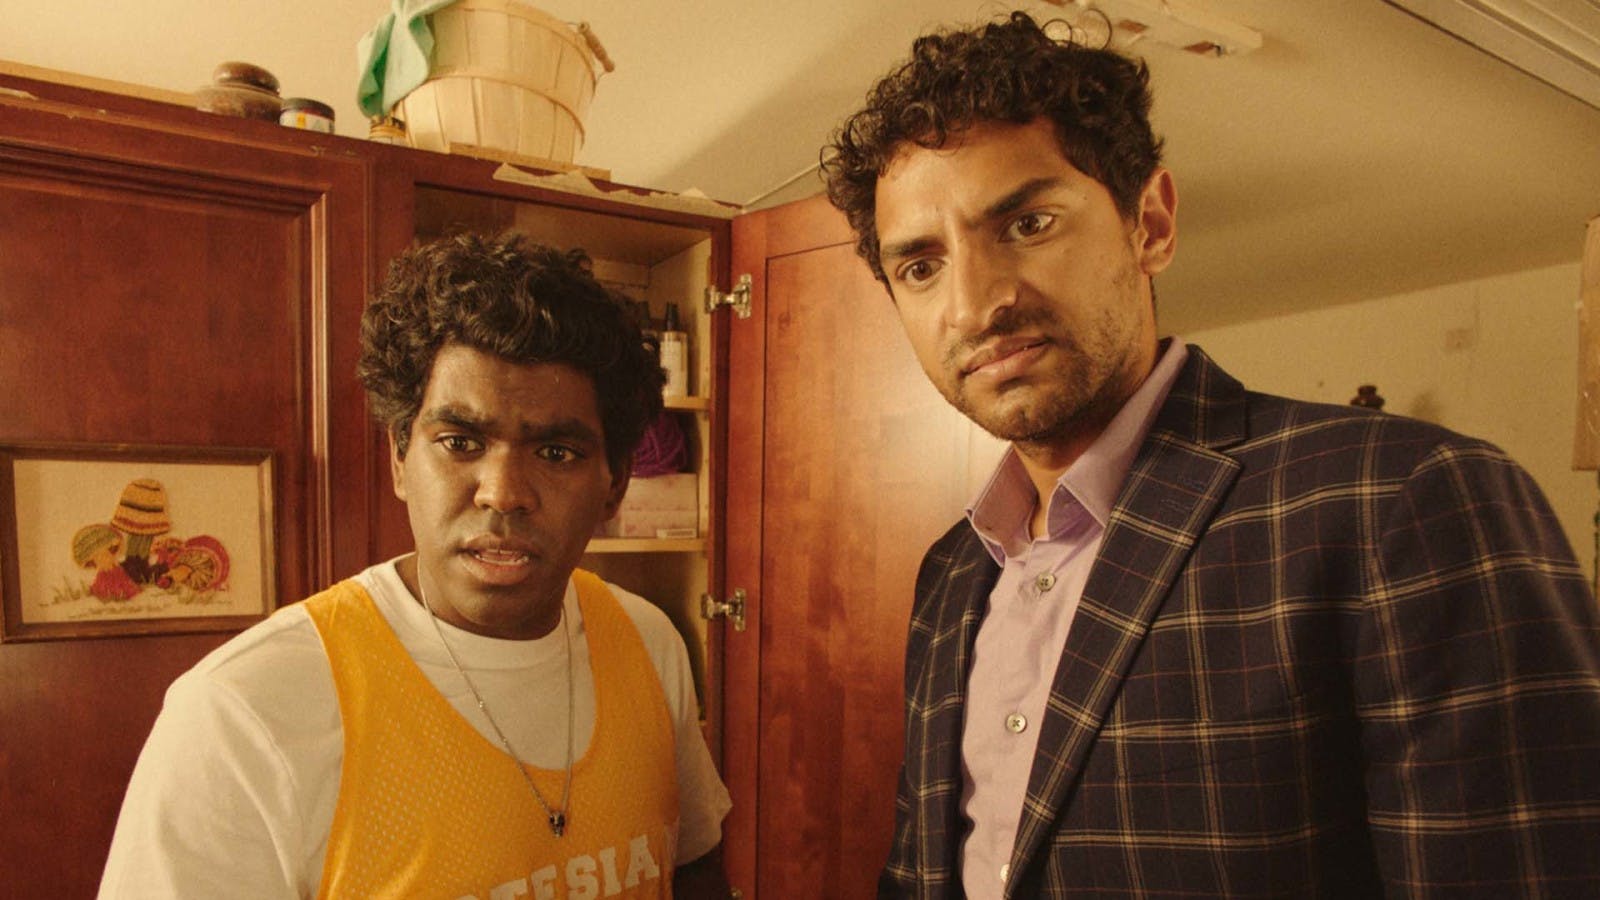 Venk Potula as “Vinny”, and Karan Soni as “Sanjay” (IFC Films) 